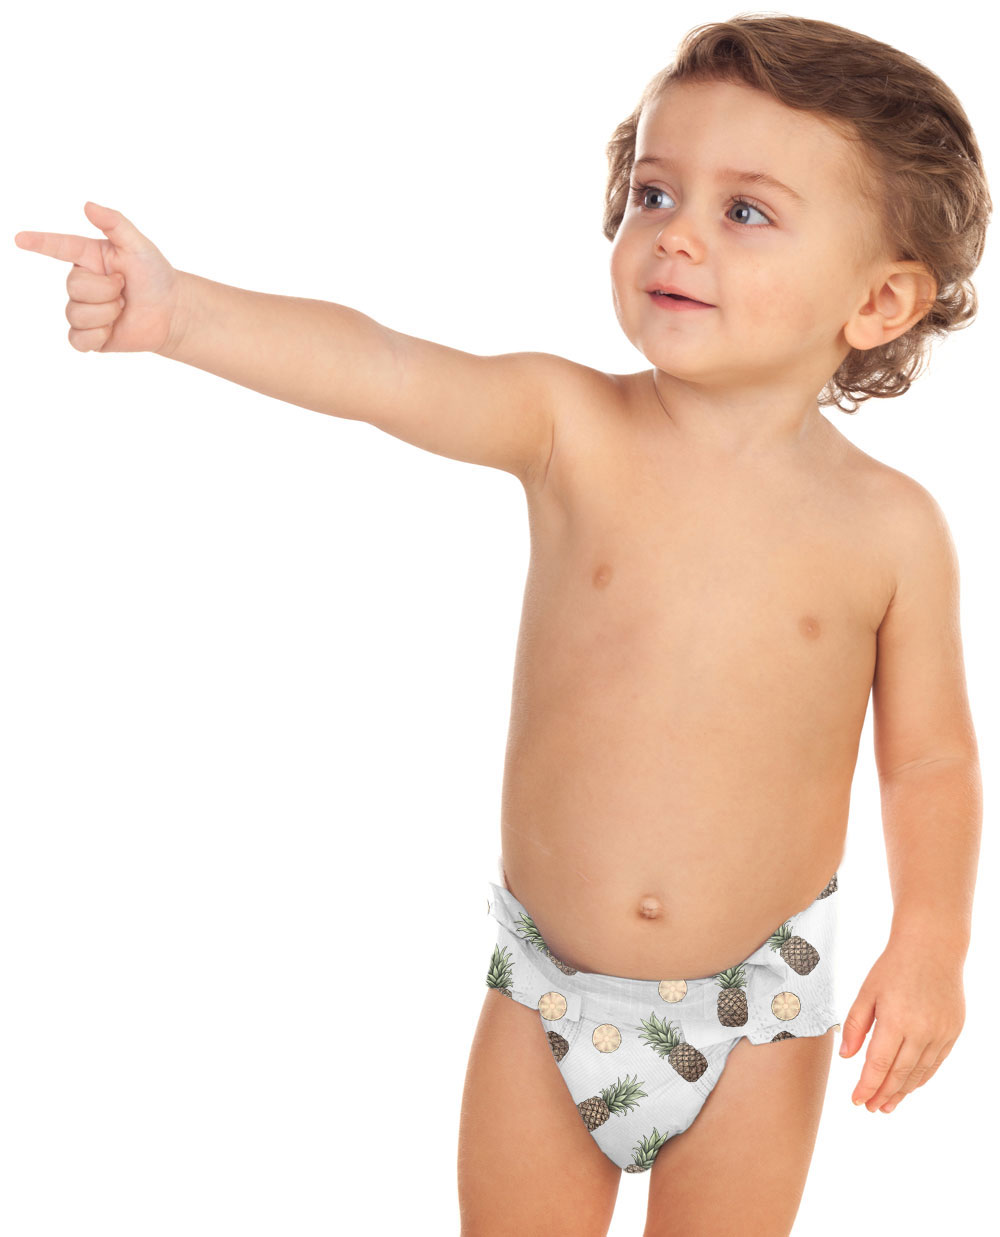 Baby Boy wearing pineapple  diapers